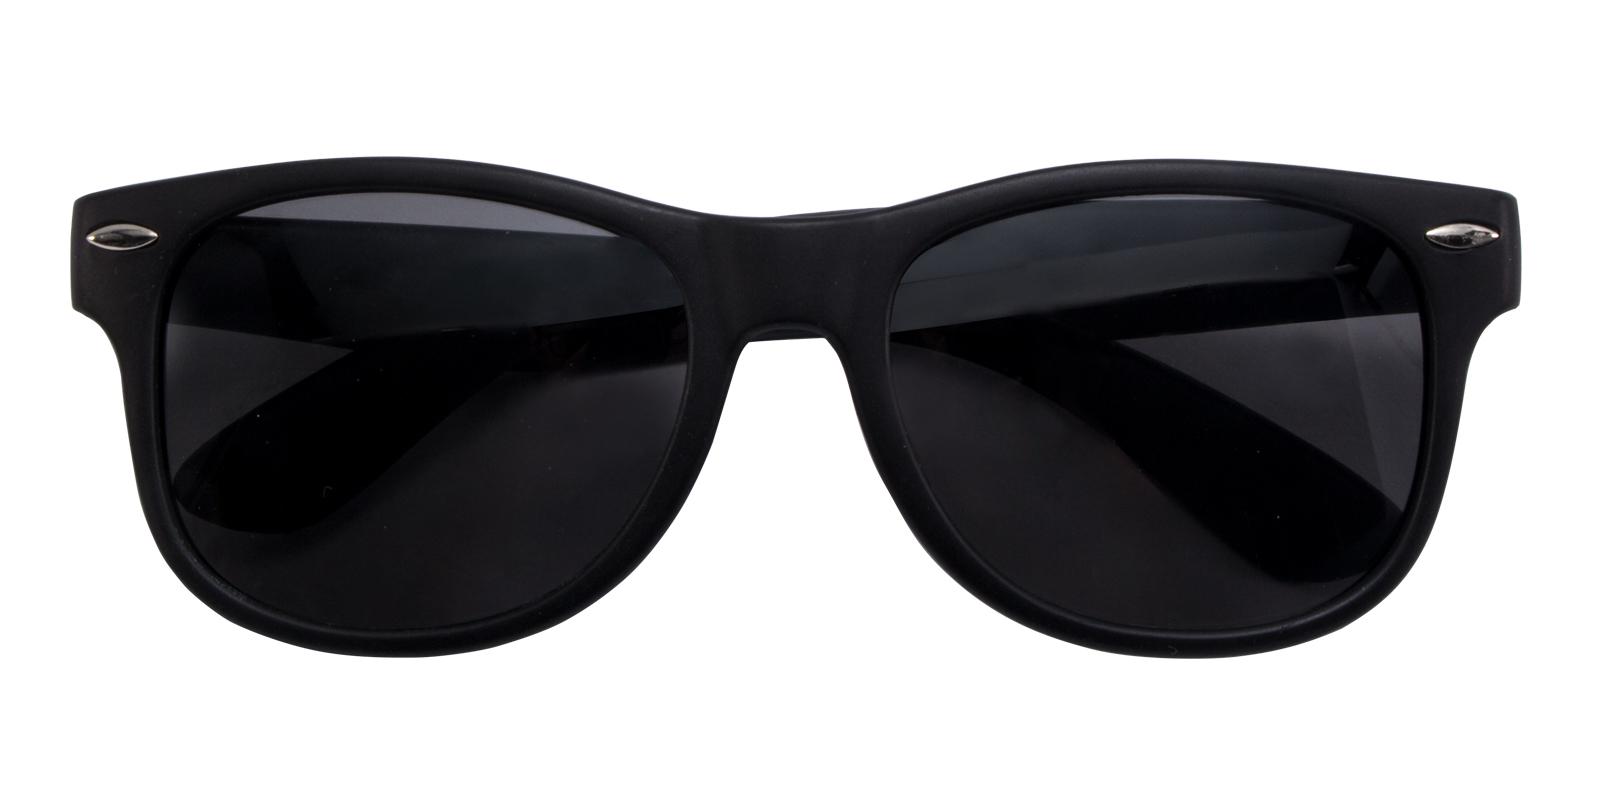 Ariel Black TR Sunglasses Frames from ABBE Glasses